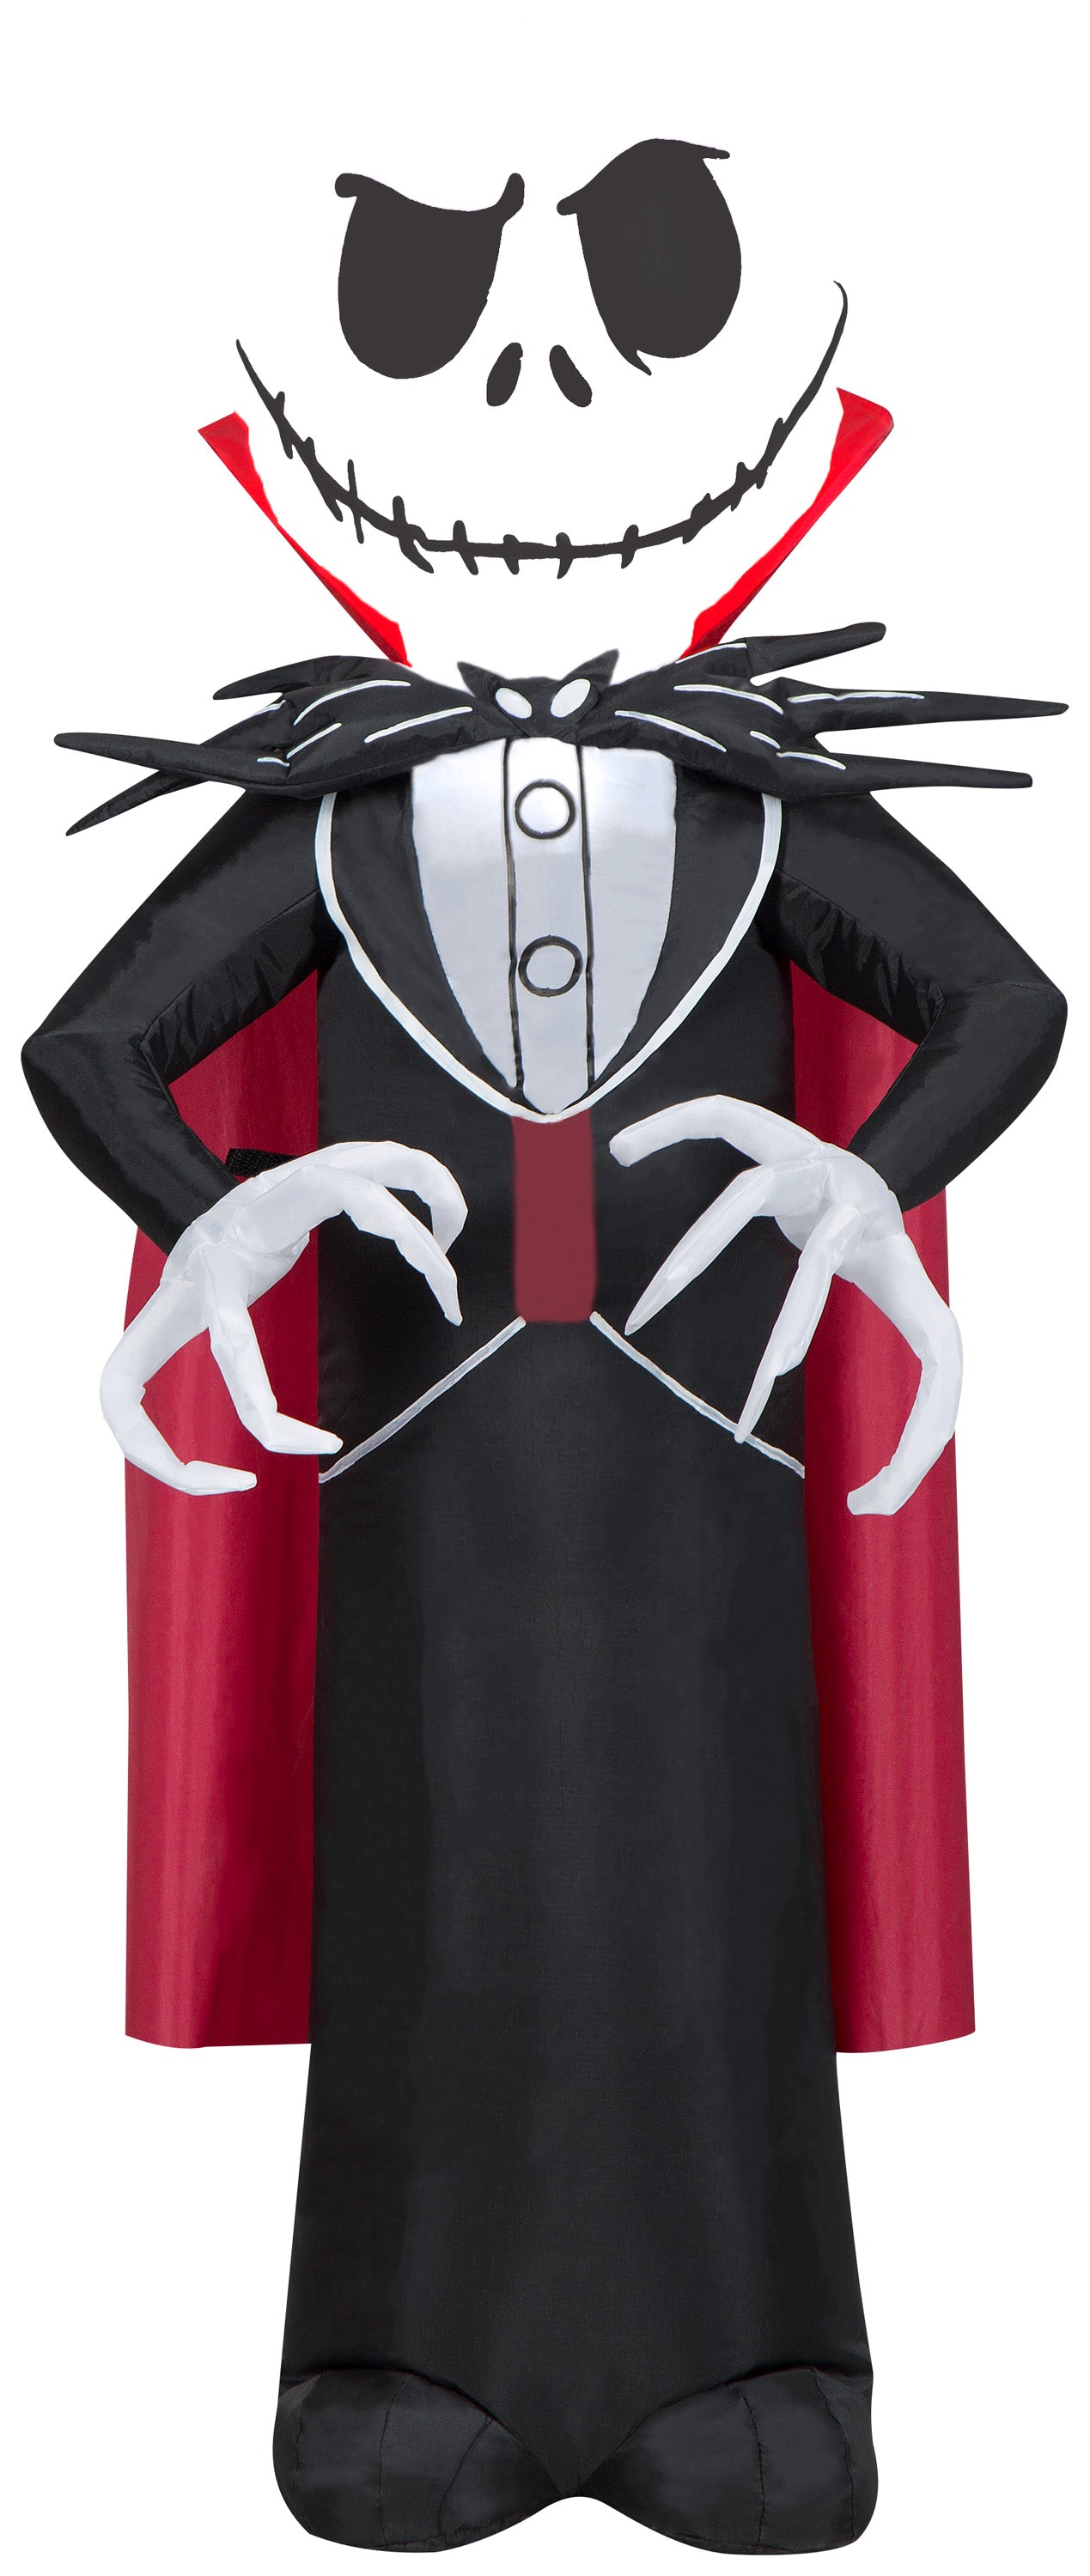 Gemmy Airblown Inflatable Jack Skellington as Vampire, 3.5 ft Tall, black